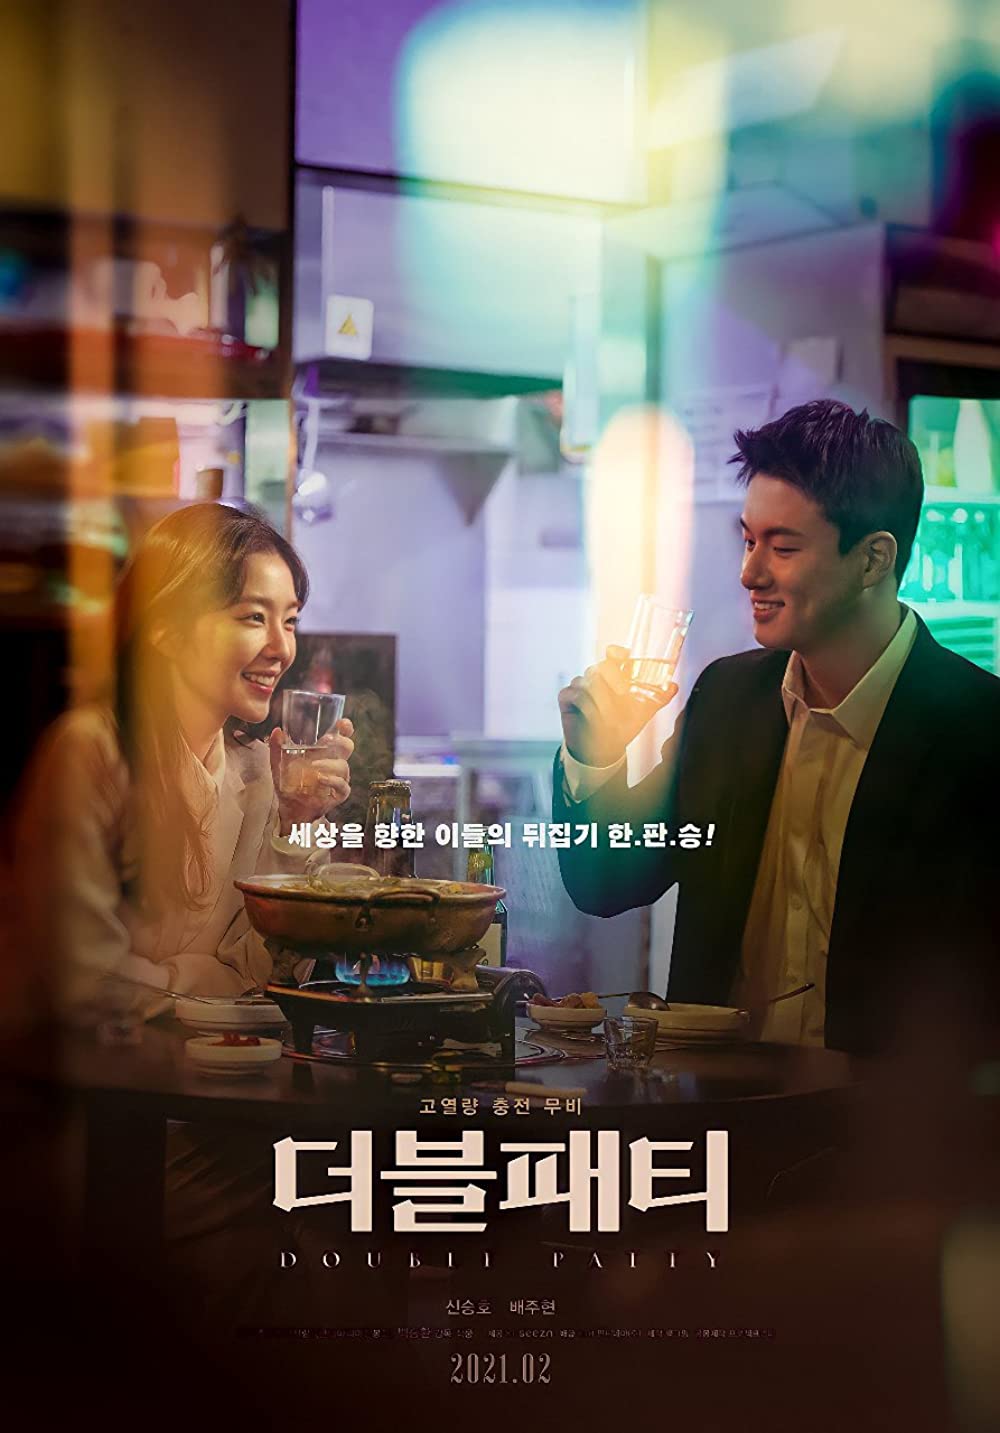 11 Film Korea terbaik romantis, On Your Wedding Day gemes banget